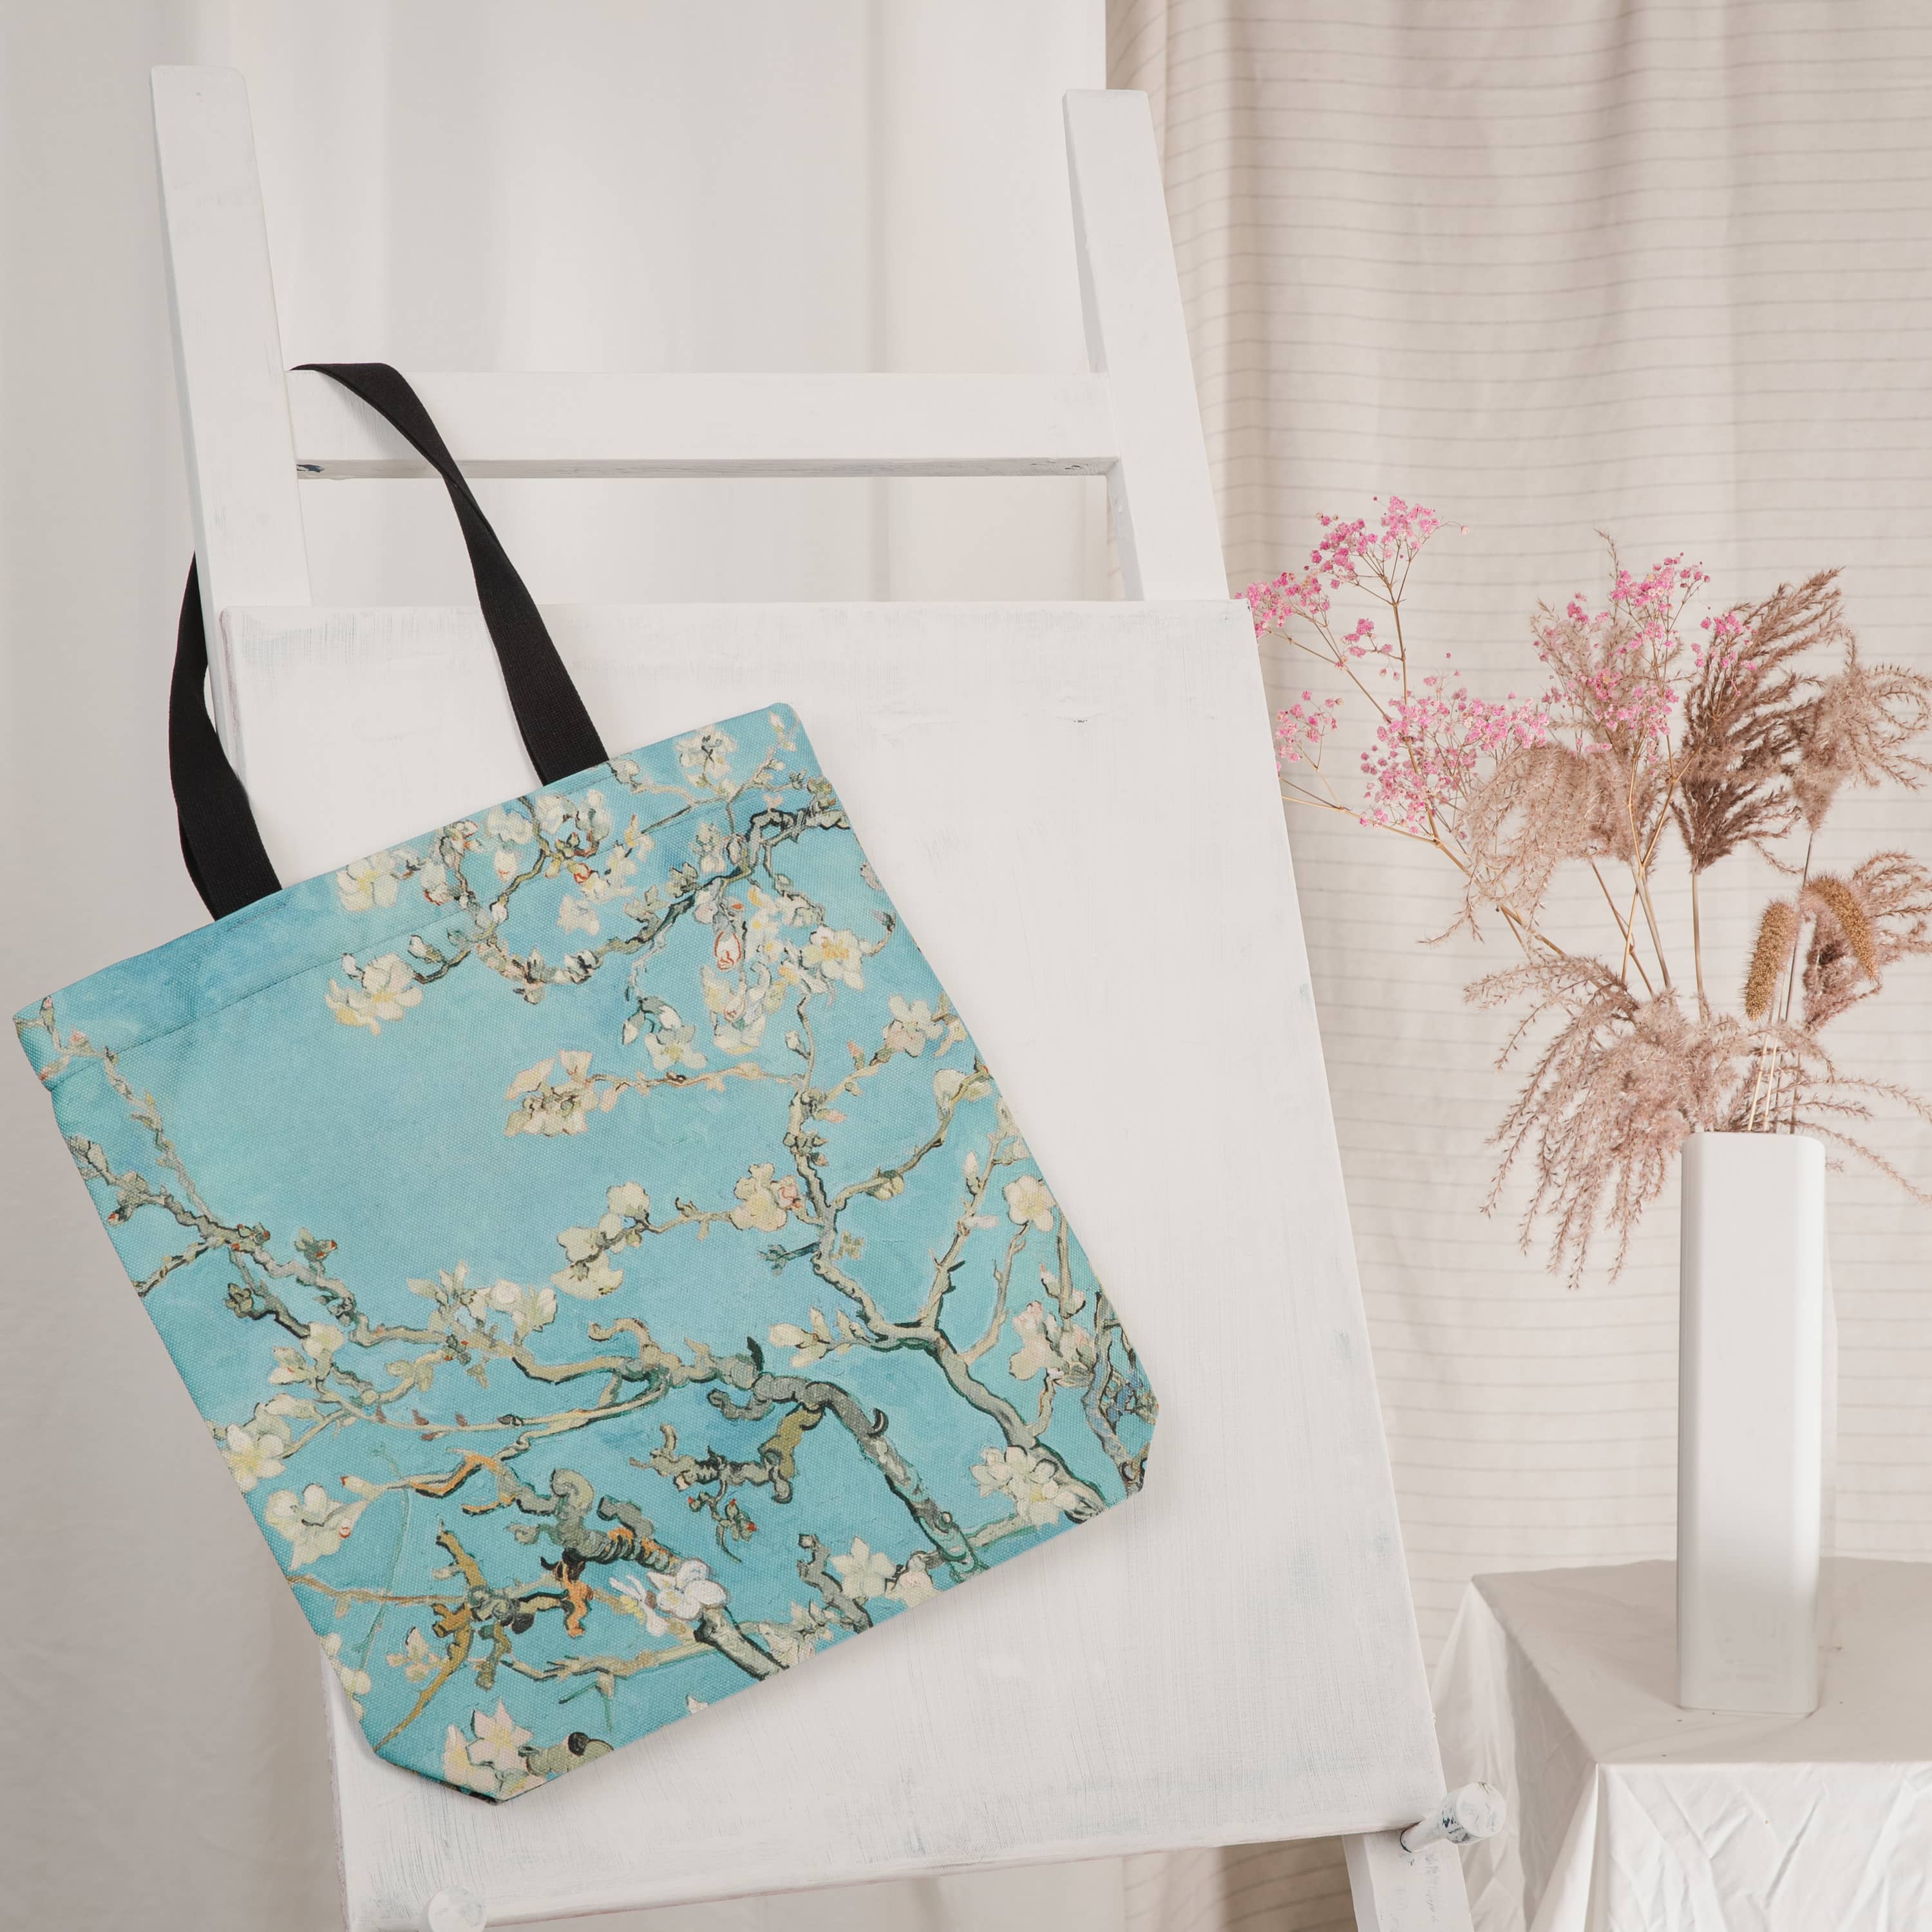 Pirkinių krepšys Vincent van Gogh "Almond Blossom"